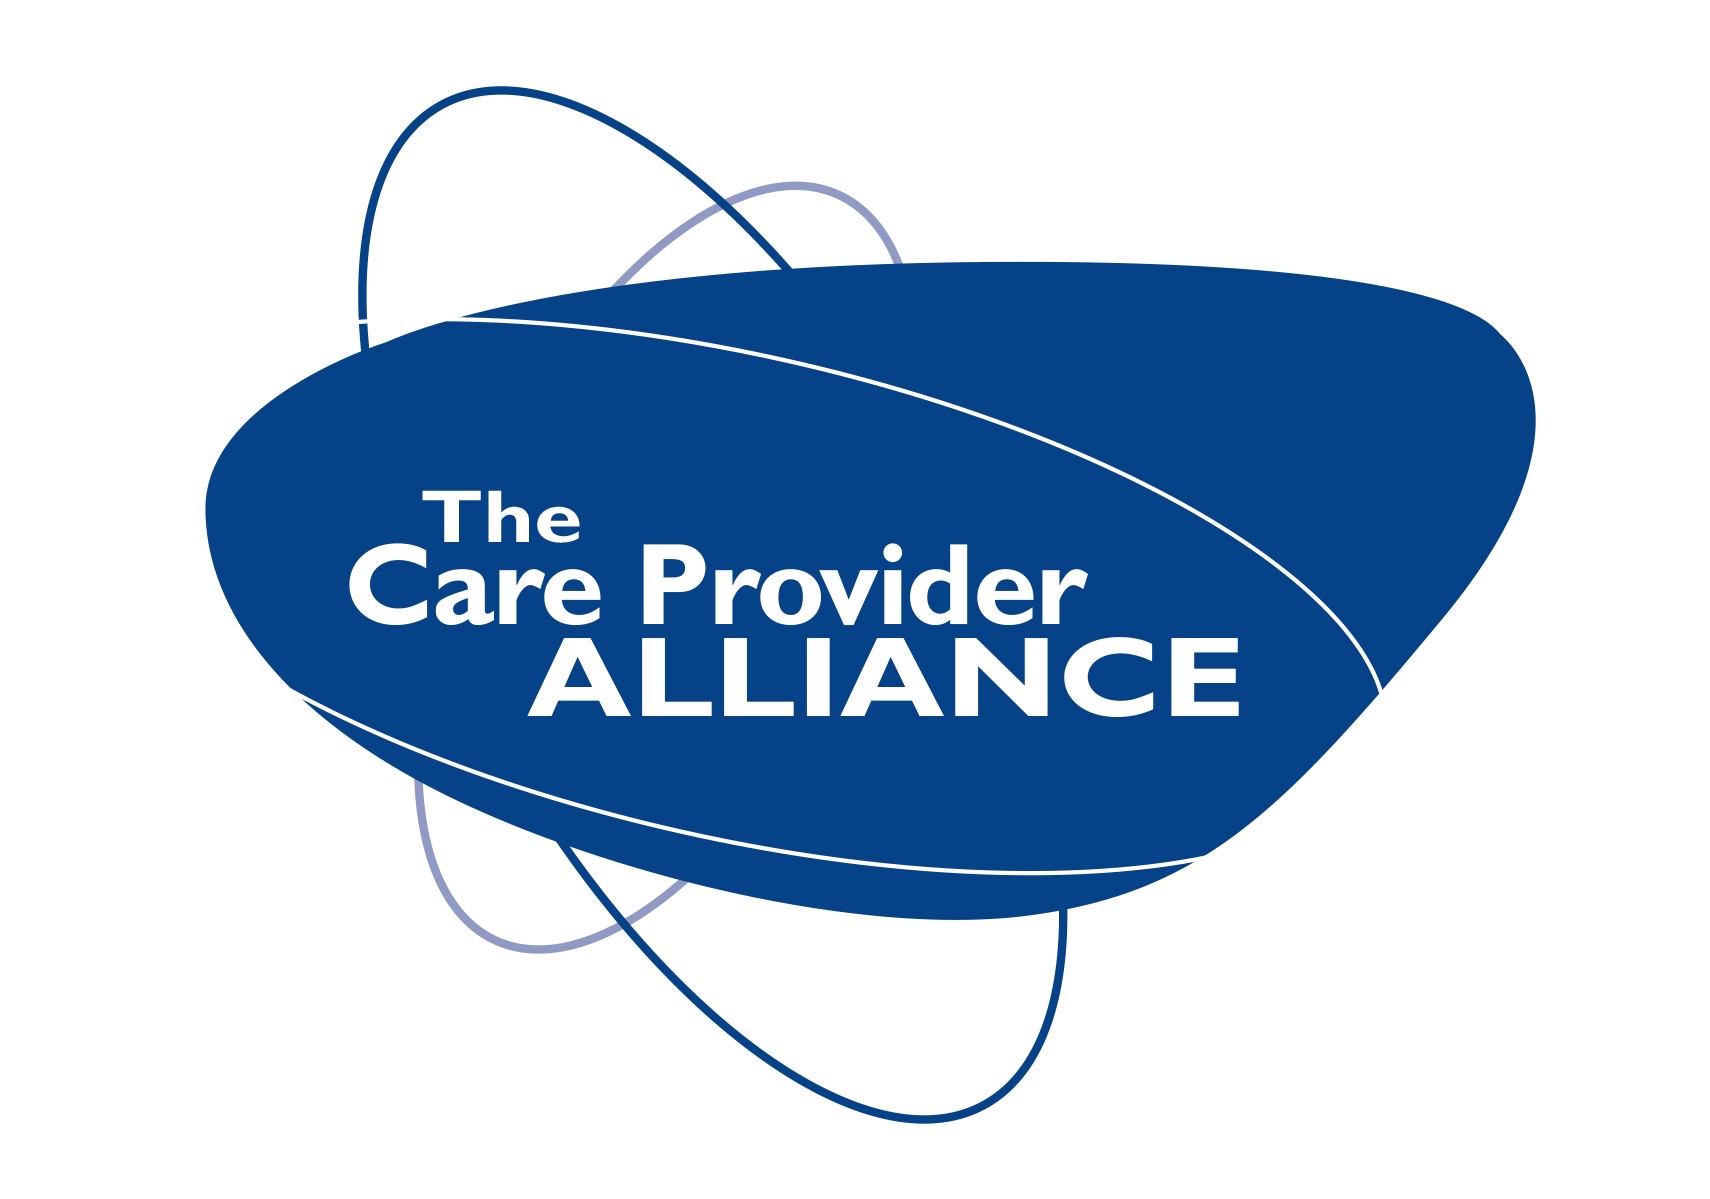 The Care Provider Alliance